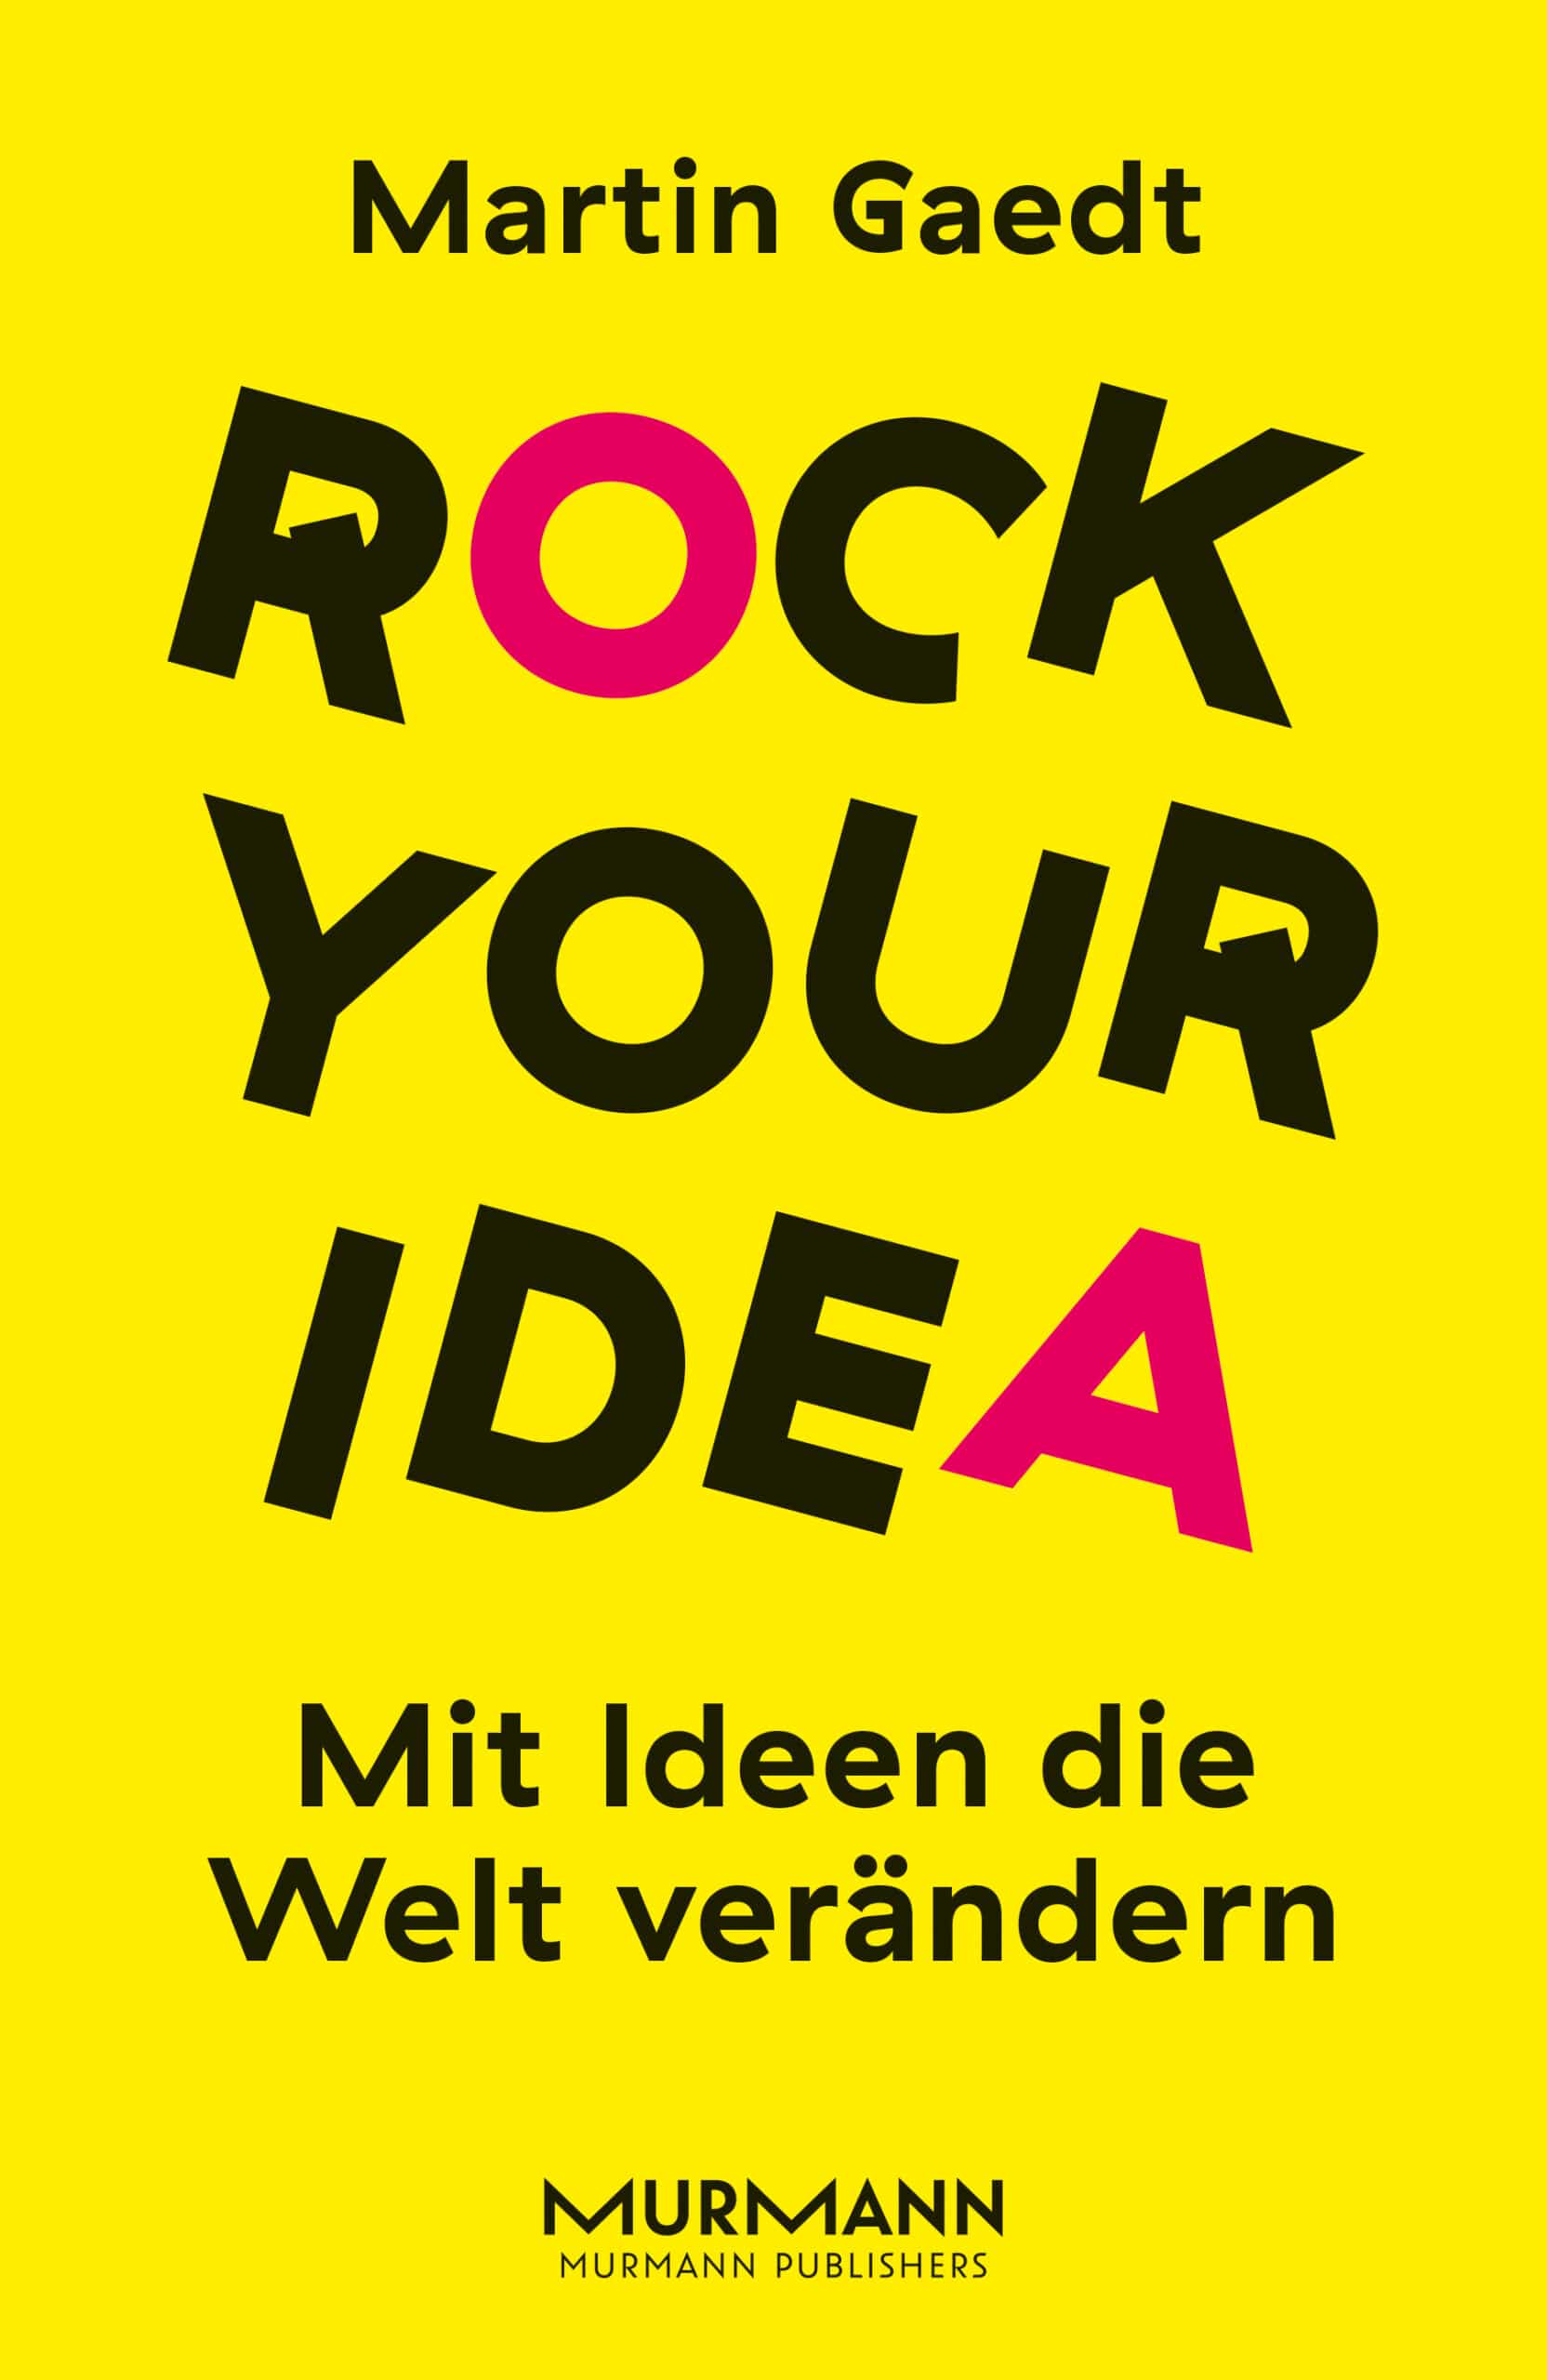 Martin Gaedt, Rock Your Idea